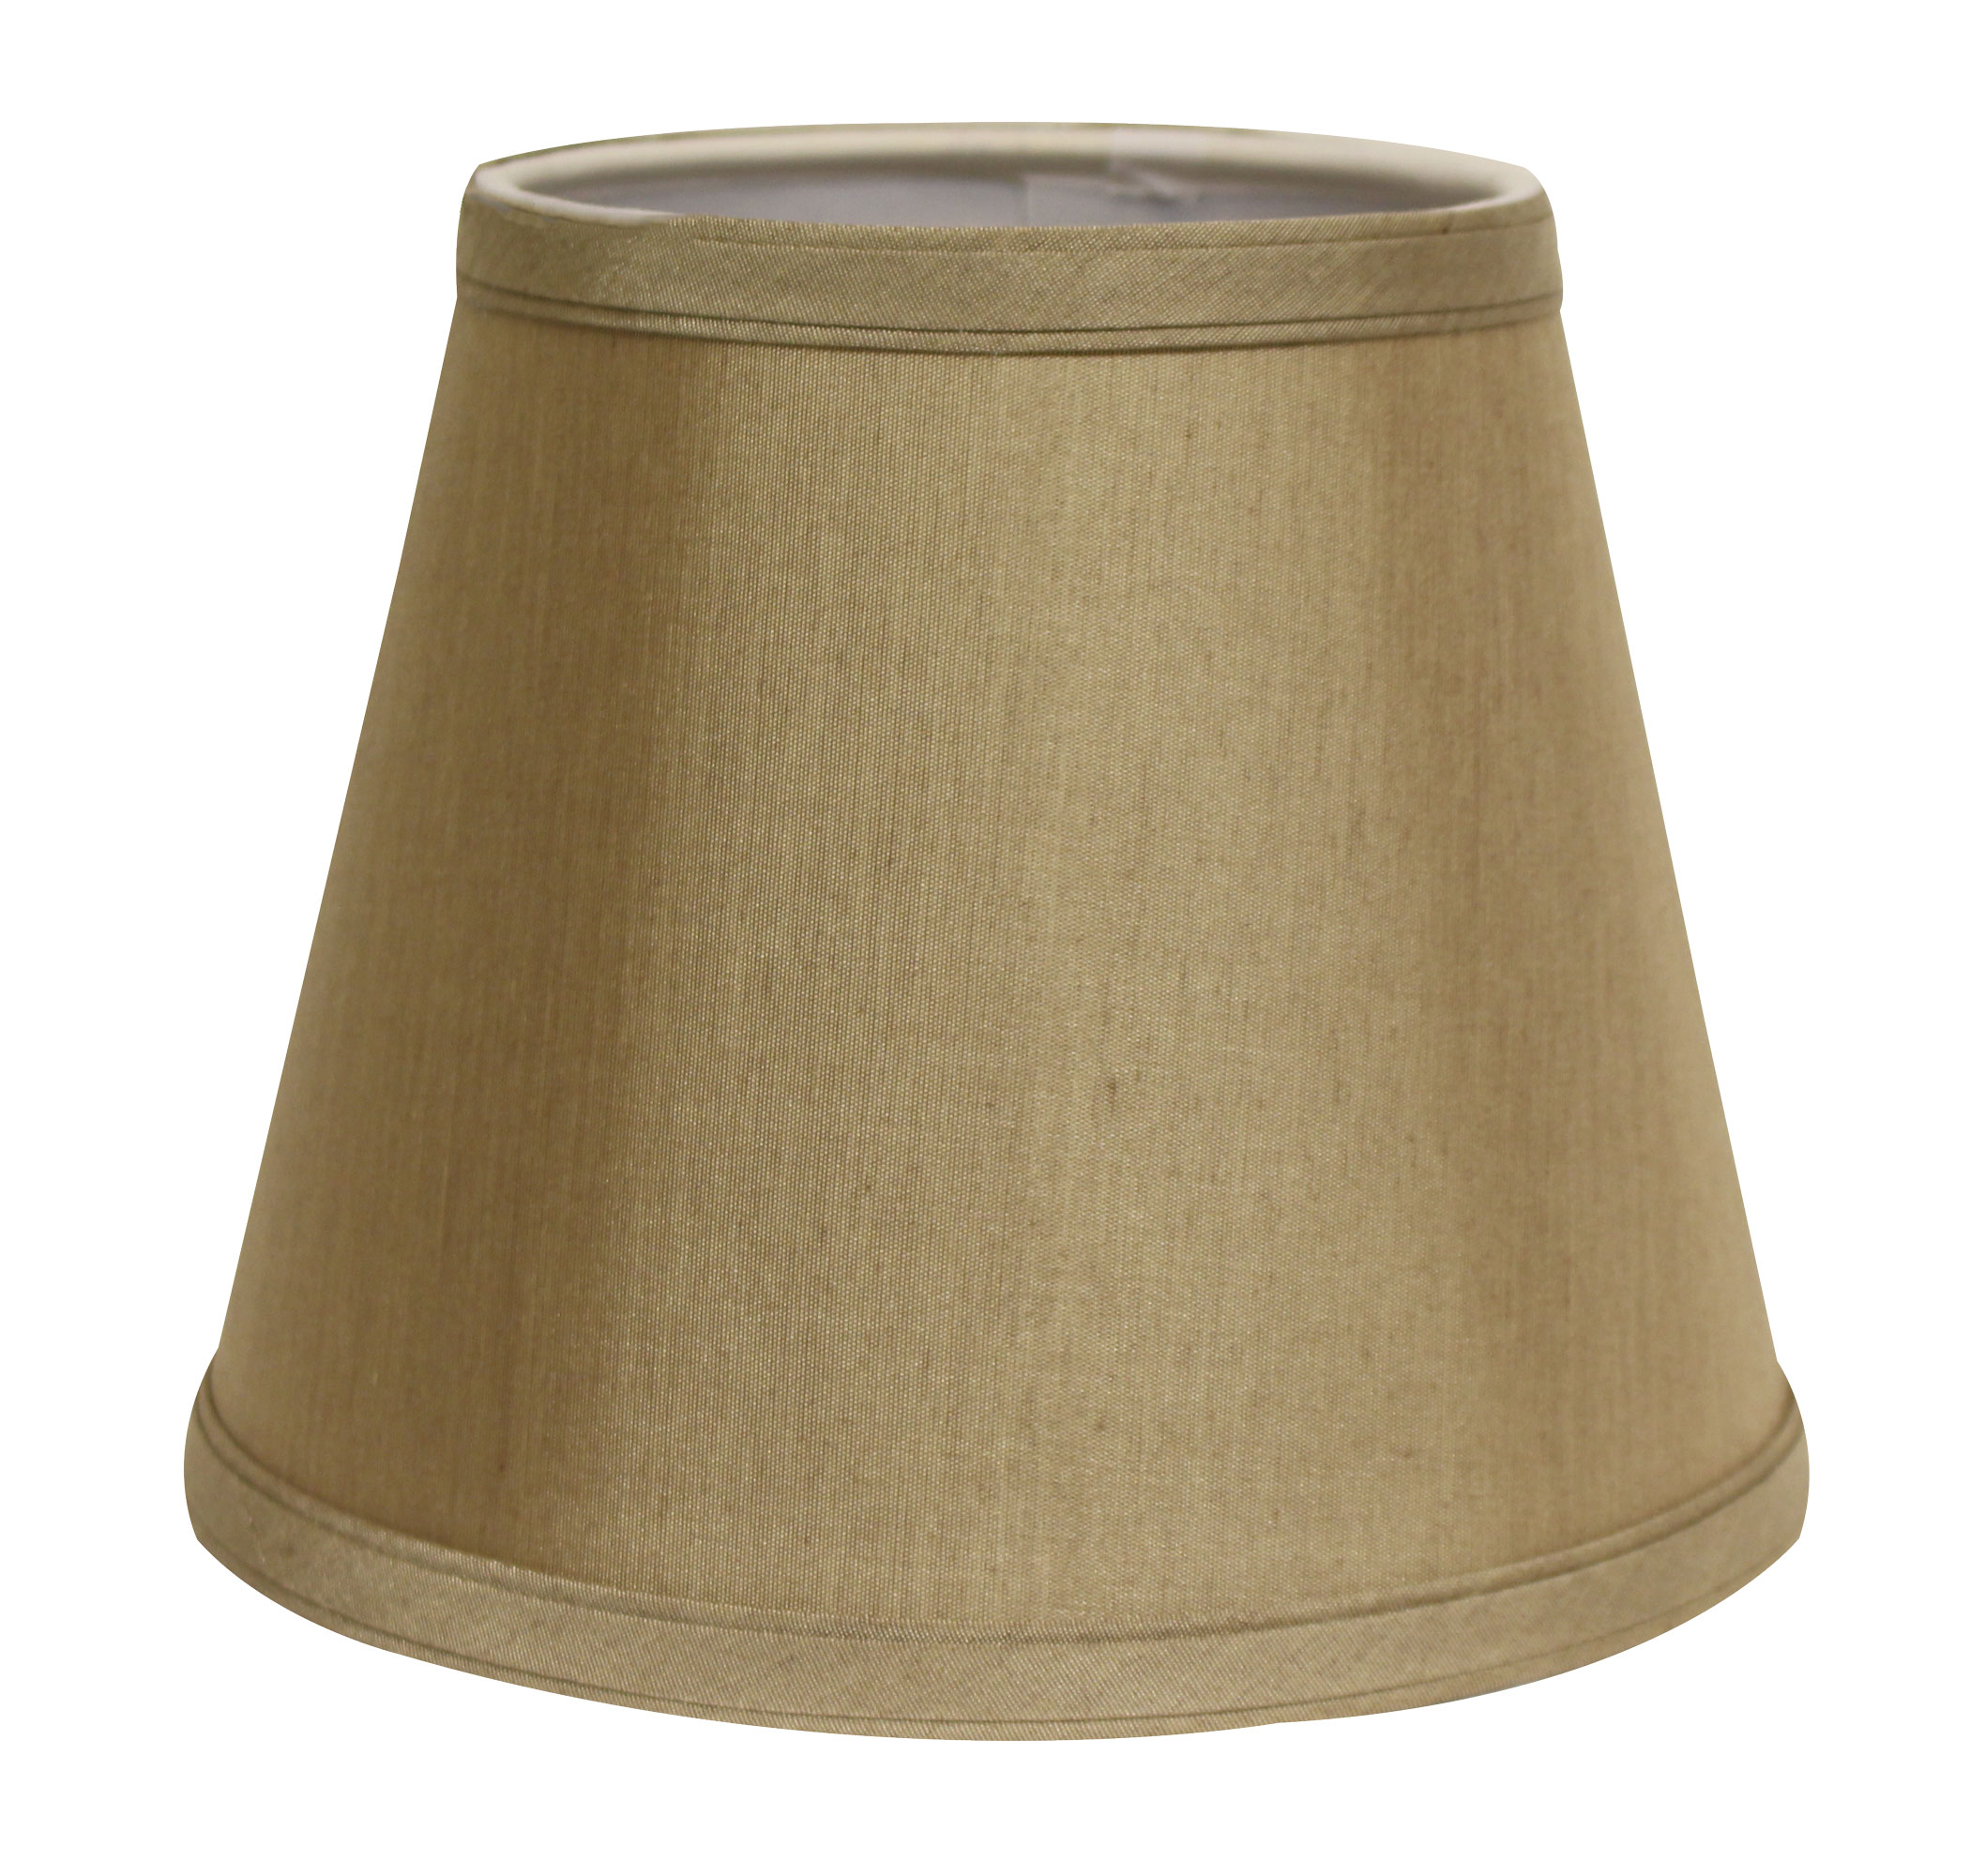 Tan Paper Empire Lamp Shade, 9 Inch Height Lamp Shades